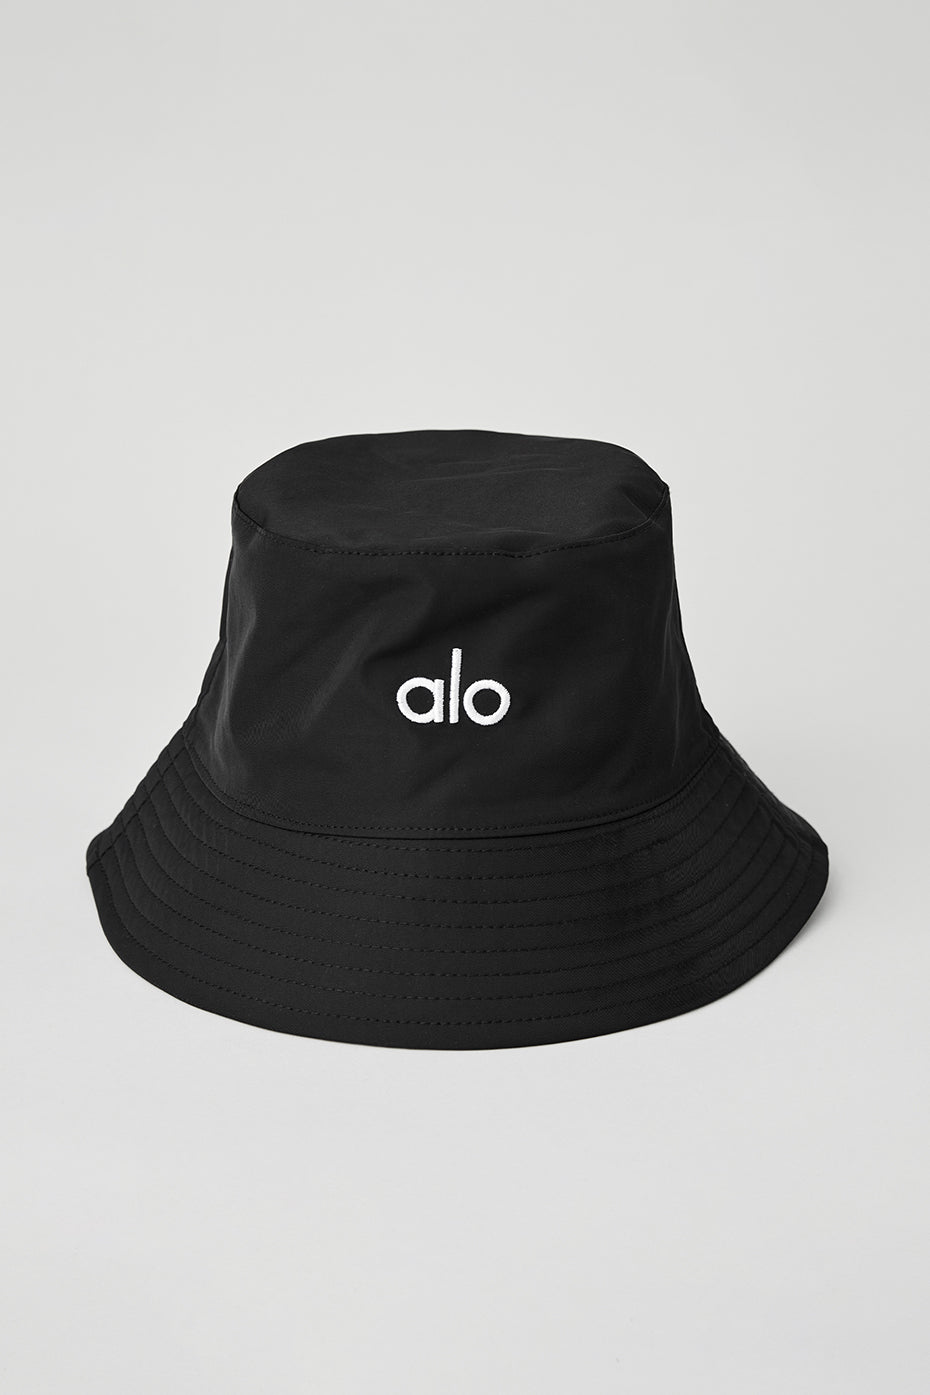 Fundamental Bucket Hat in Black, Size: Medium/Large | Alo Yoga